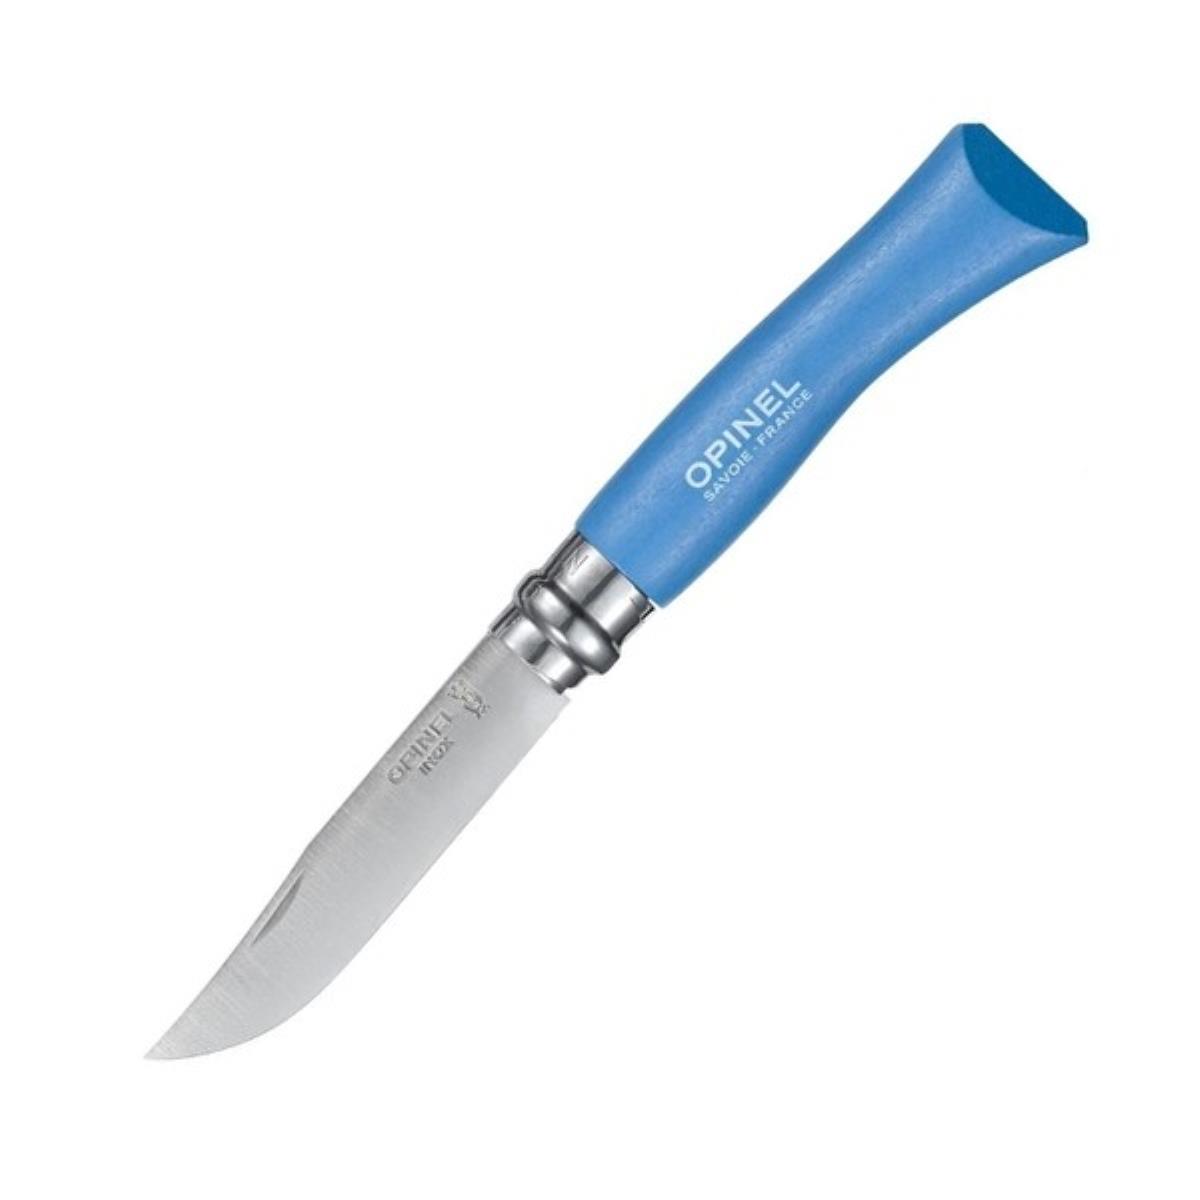 Нож №7 VRI Colored Tradition Sky blue нерж. сталь, рукоять граб, длина клинка8см (голубой) OPINEL нож сапсан граб аир 95х18